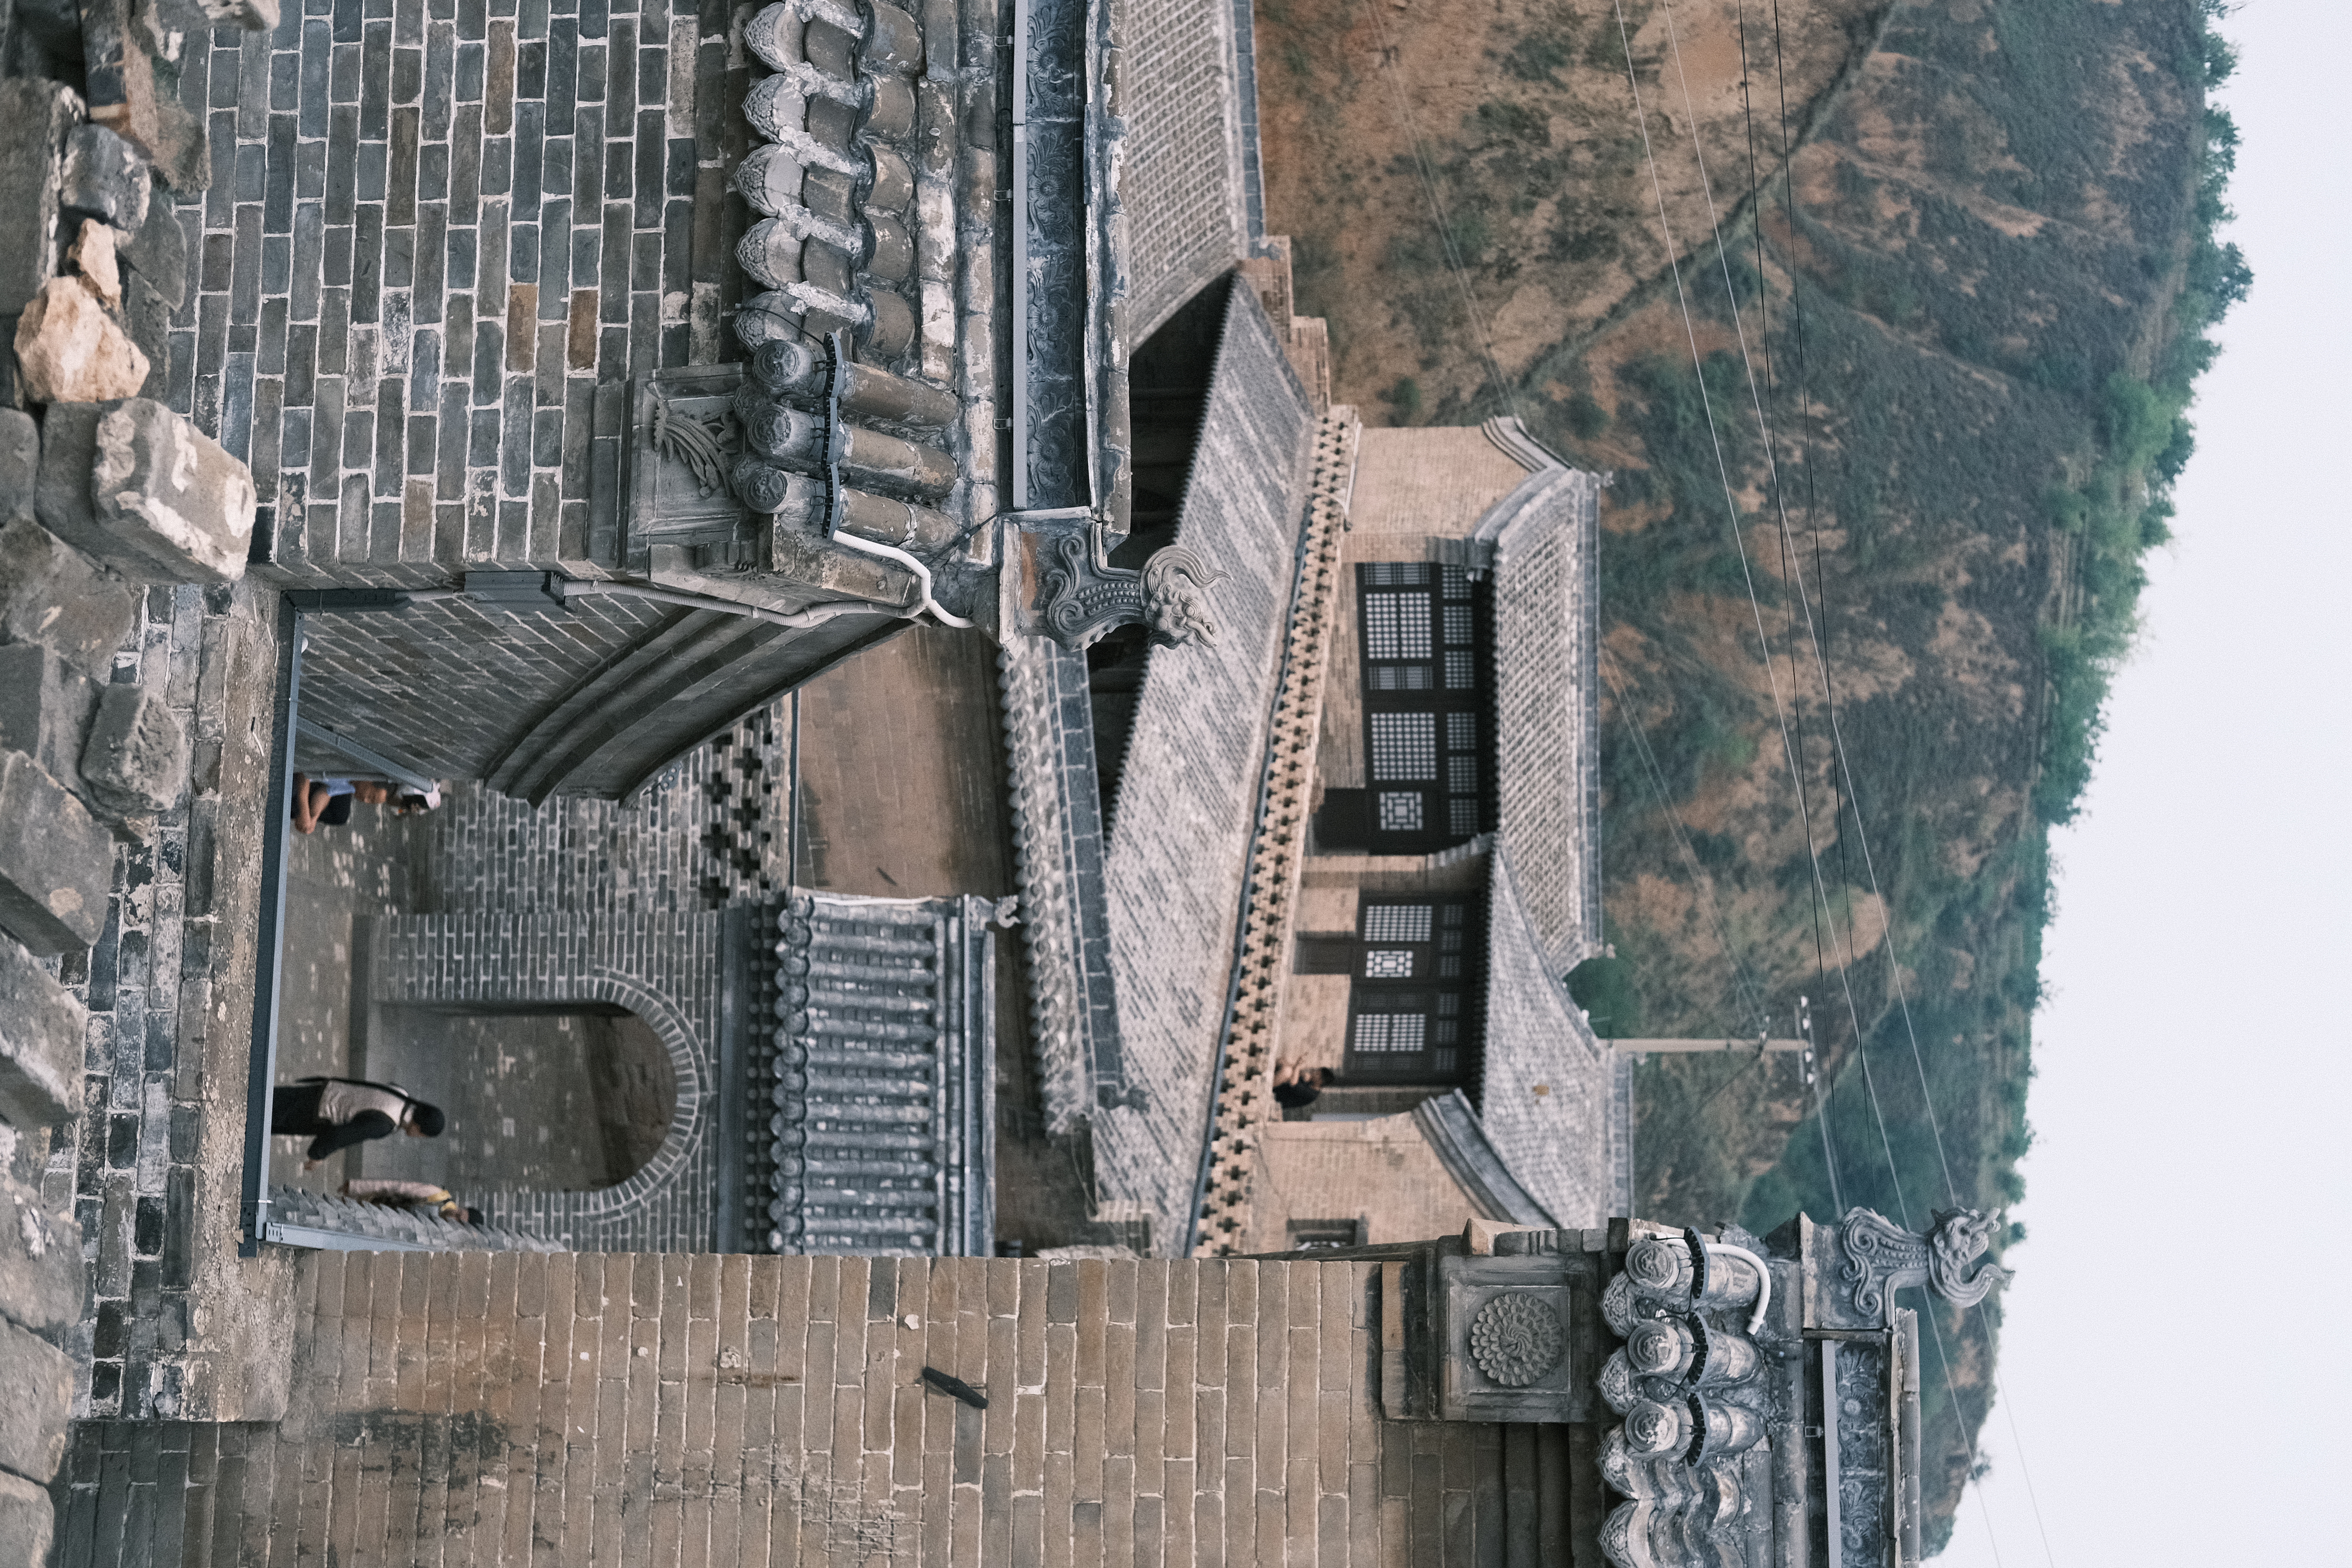 Explore the ancient underground tunnels beneath Shanxi's Zhangjiata Village